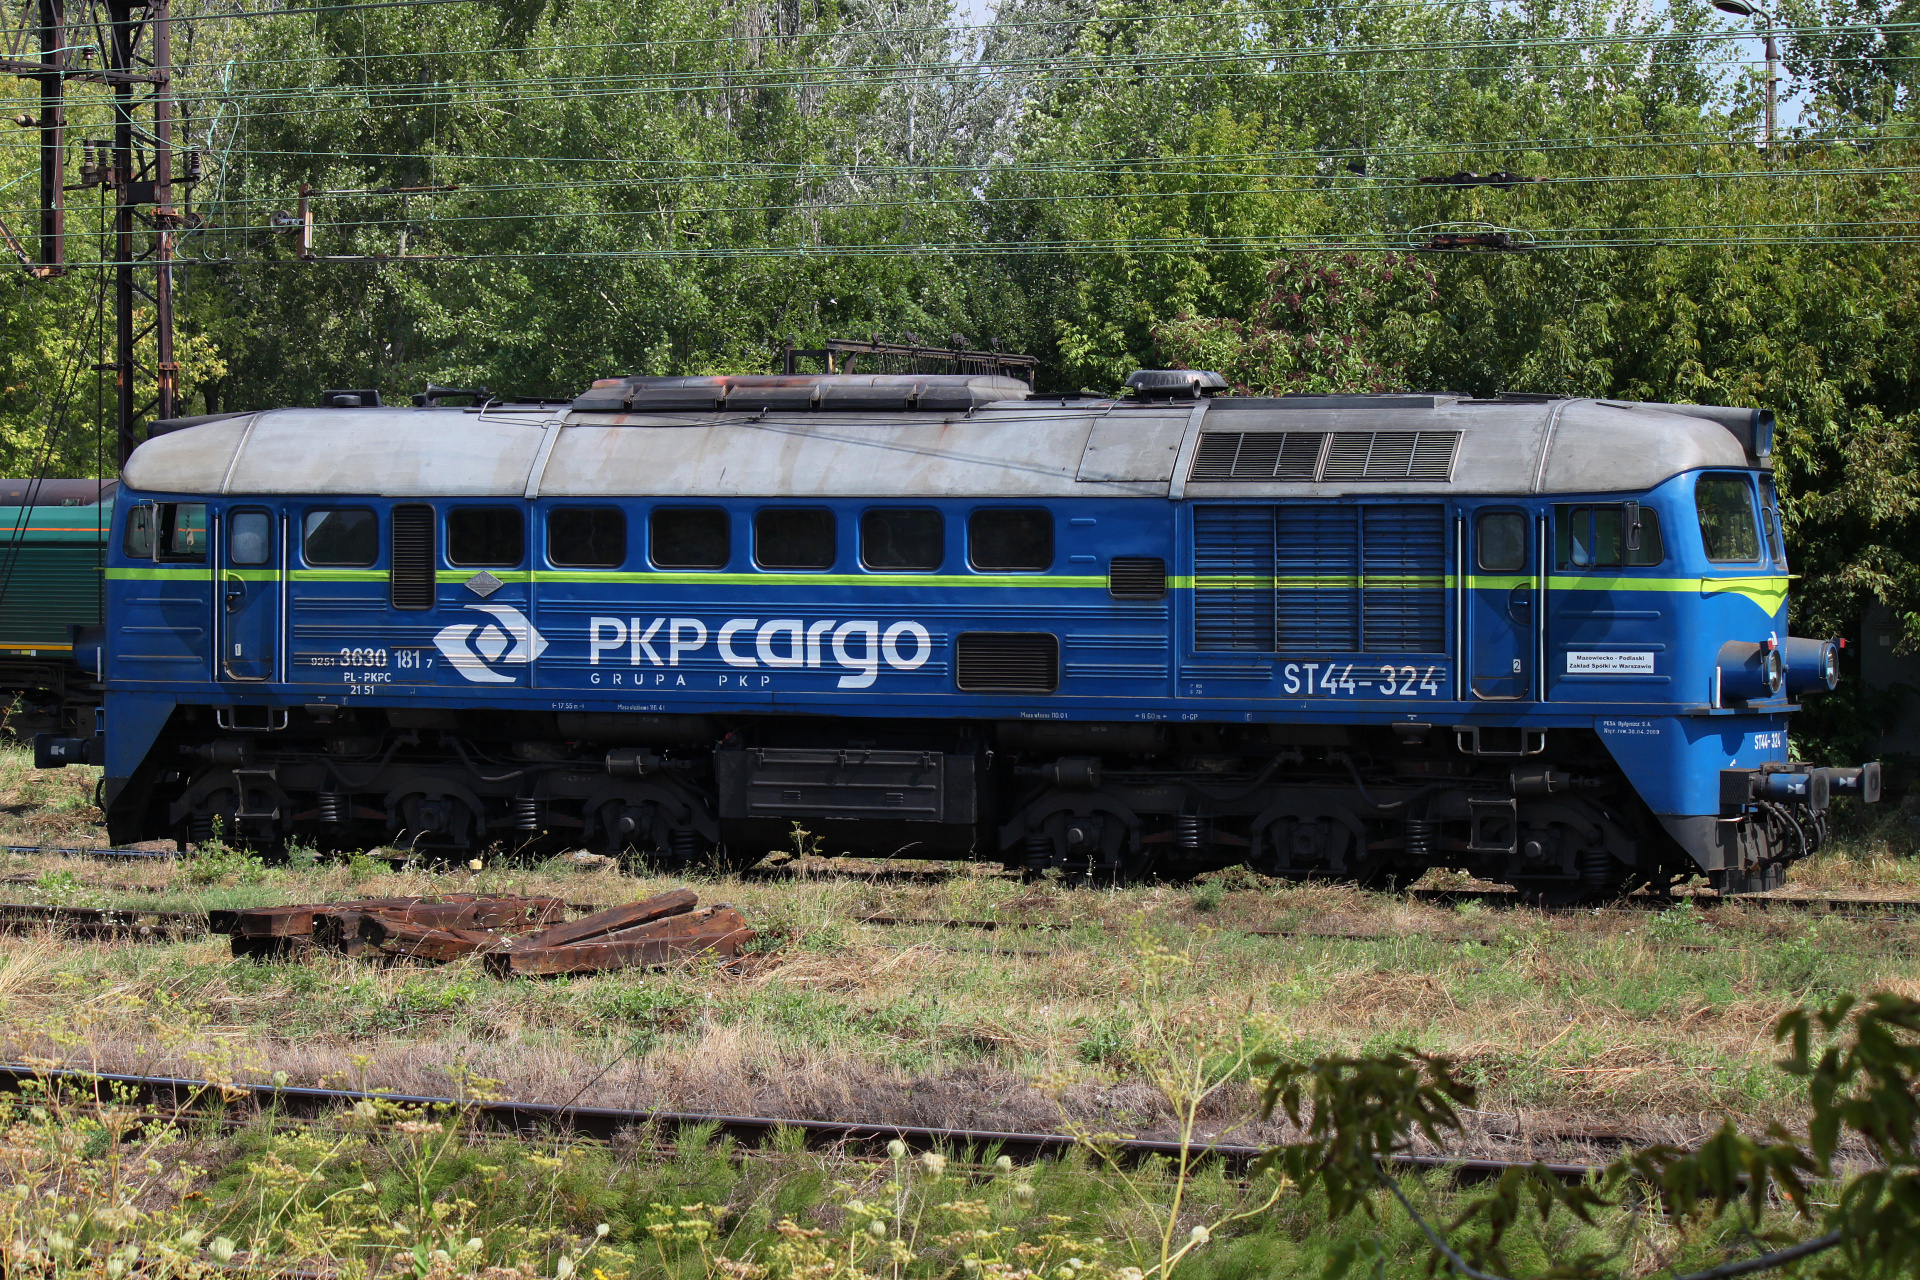 ST44-324 (Vehicles » Trains and Locomotives » ЛТЗ M62)